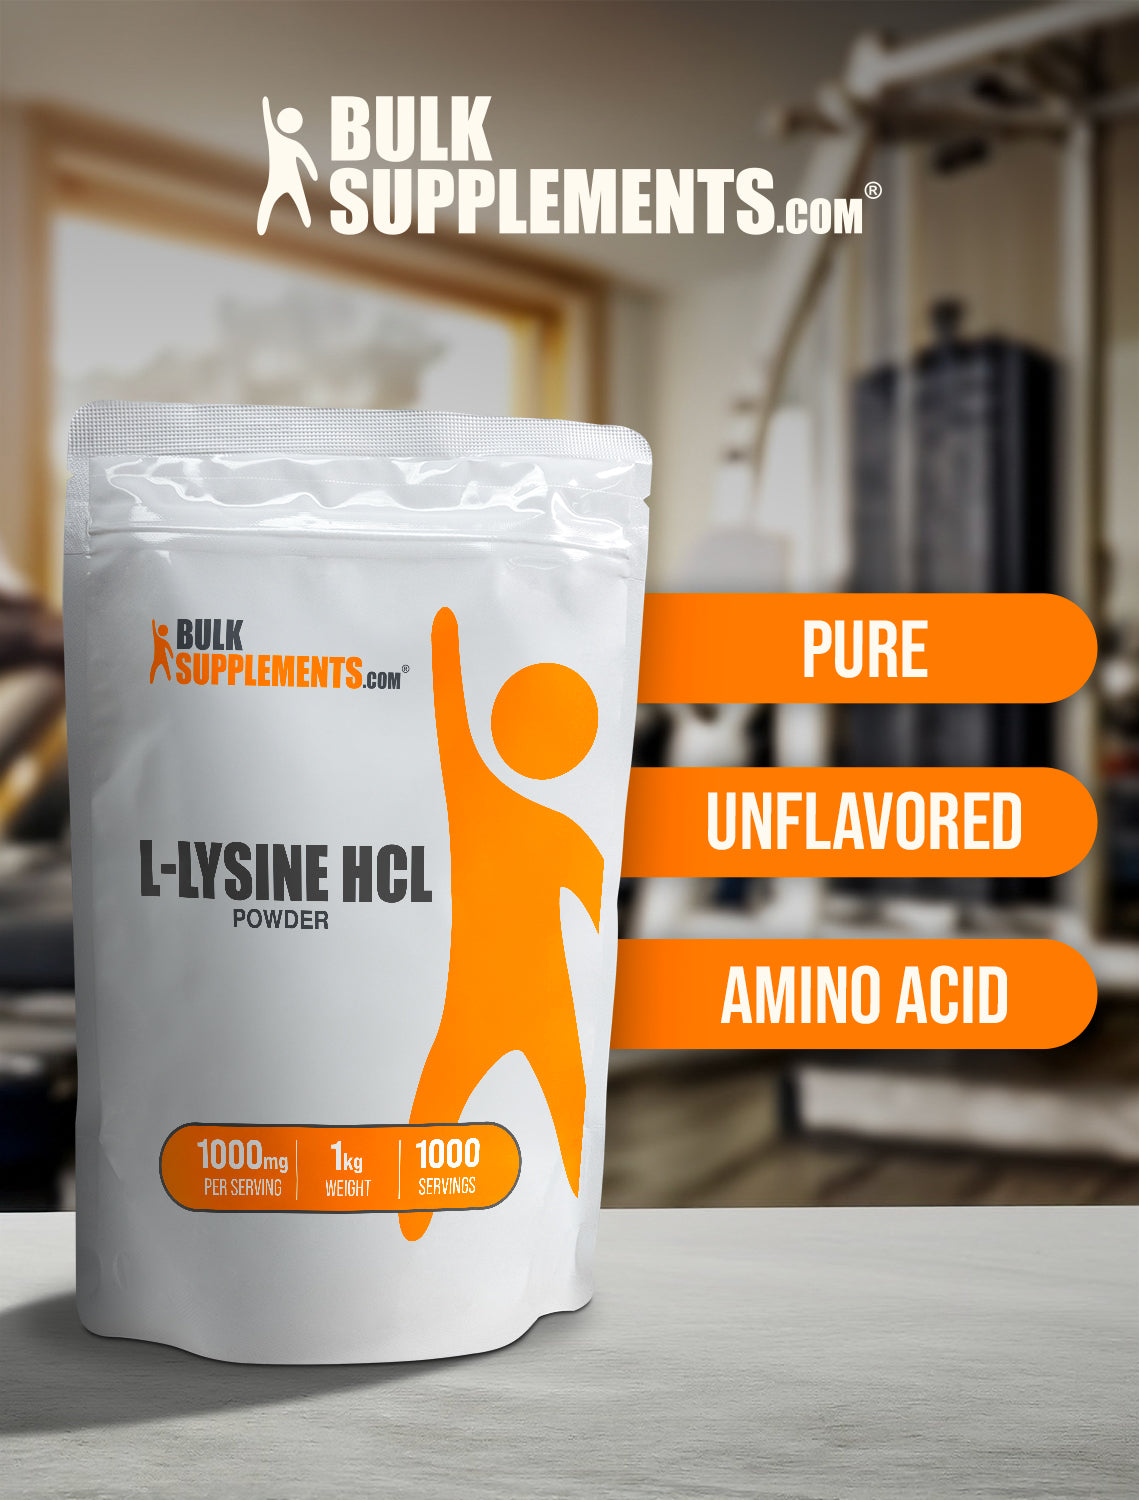 L-Lysine HCl powder 1kg keywords image